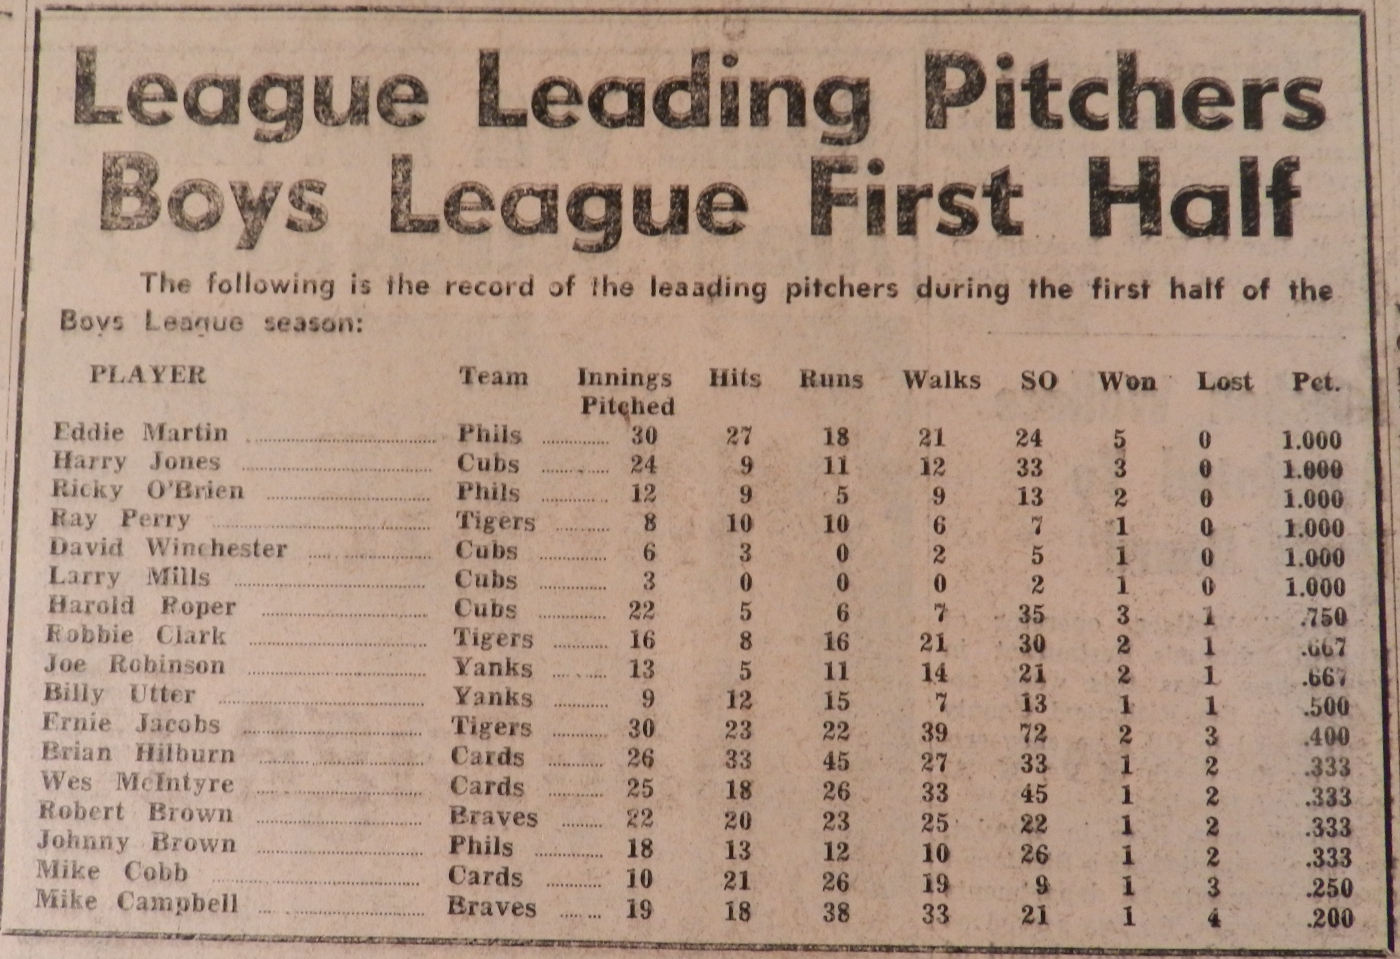 1957 Little League pitchers OH.jpg